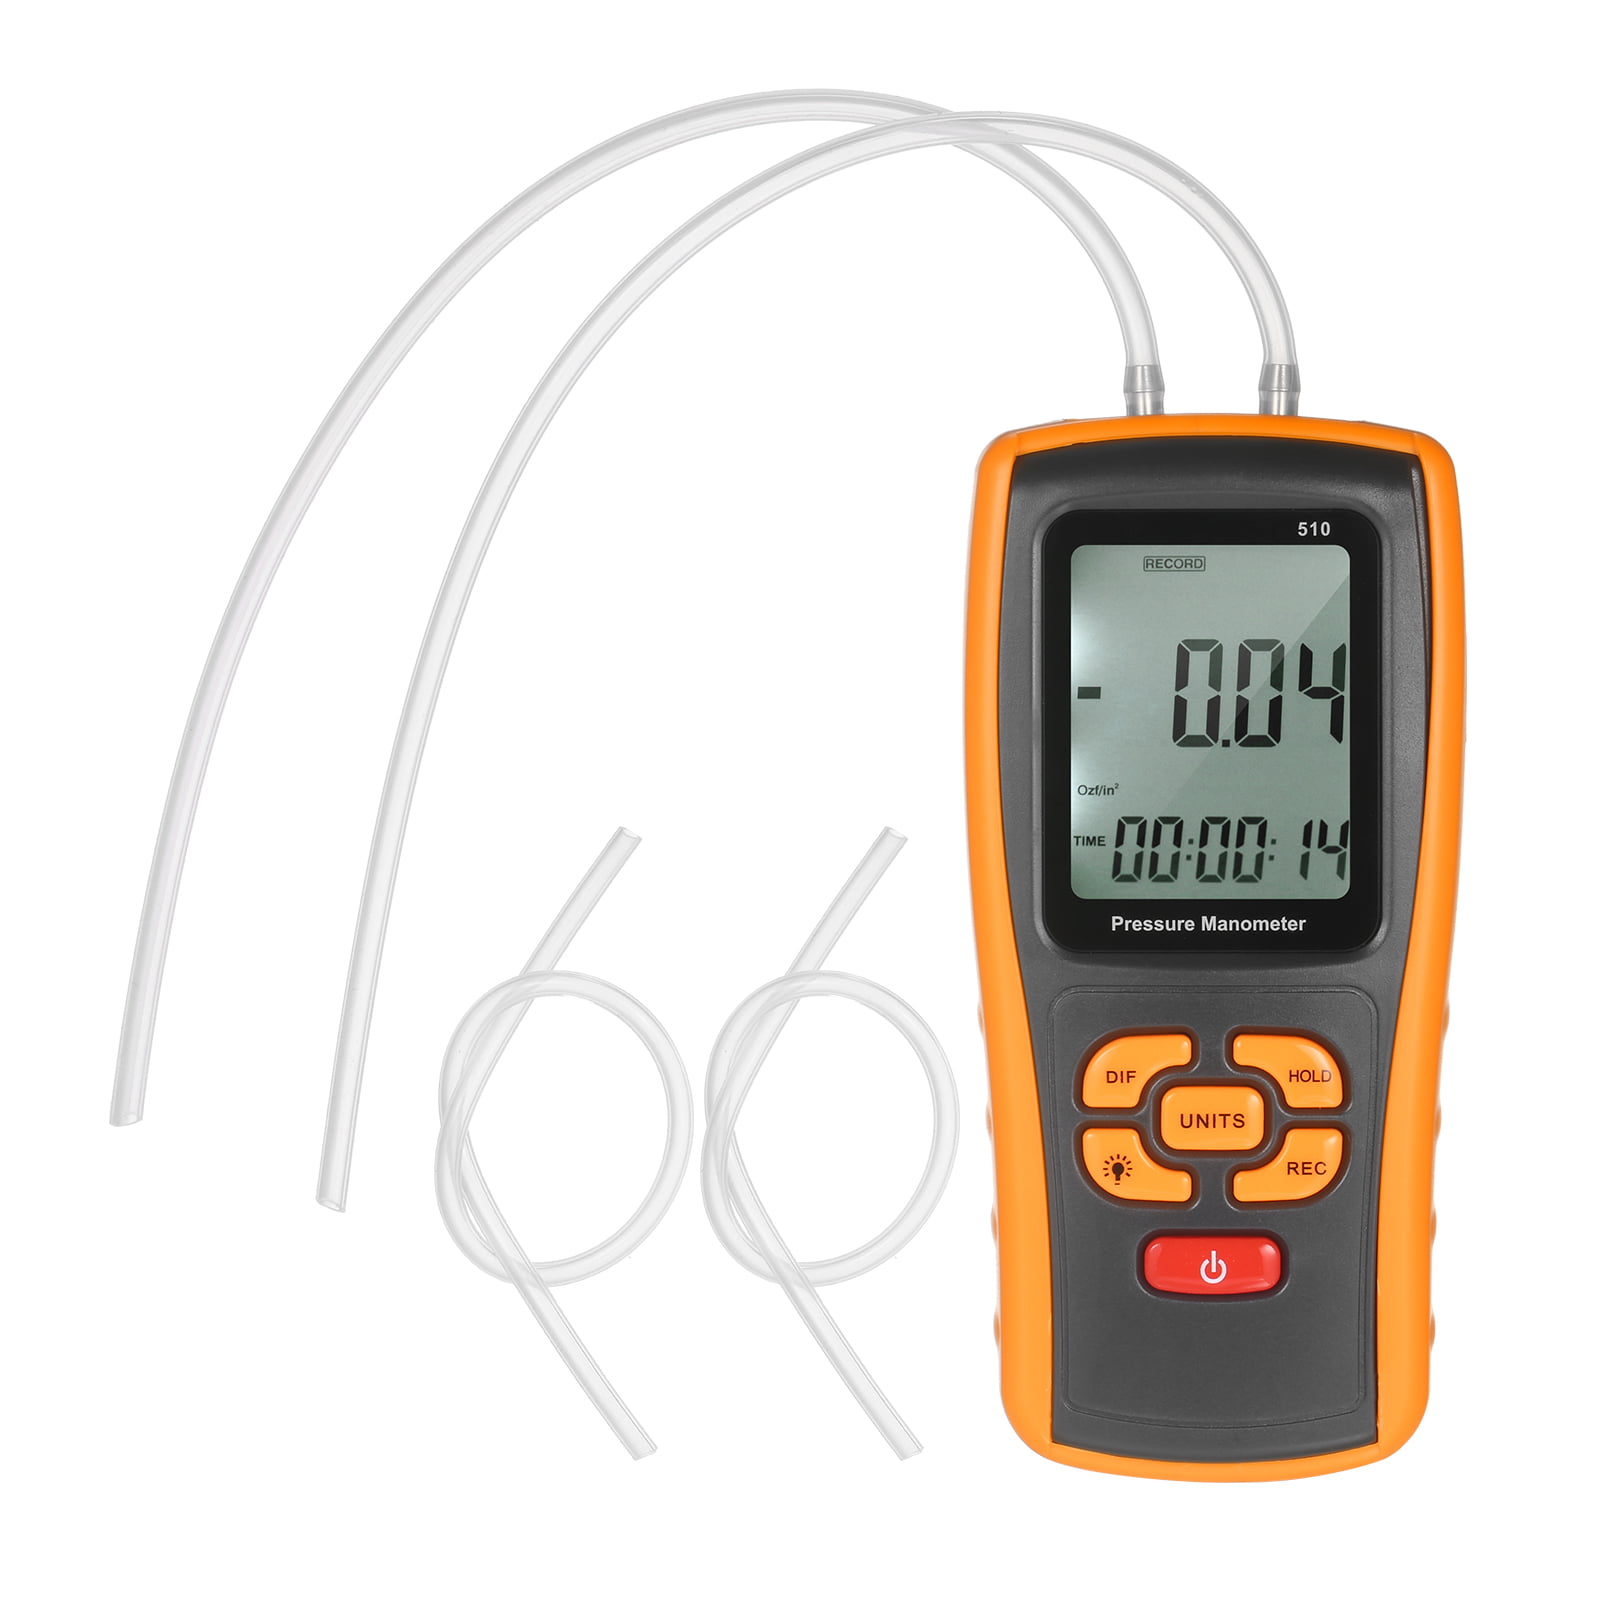 34kpa Digital Manometer Air Pressure Meter Pressure Gauges Differential Gauge Kit Data Hold